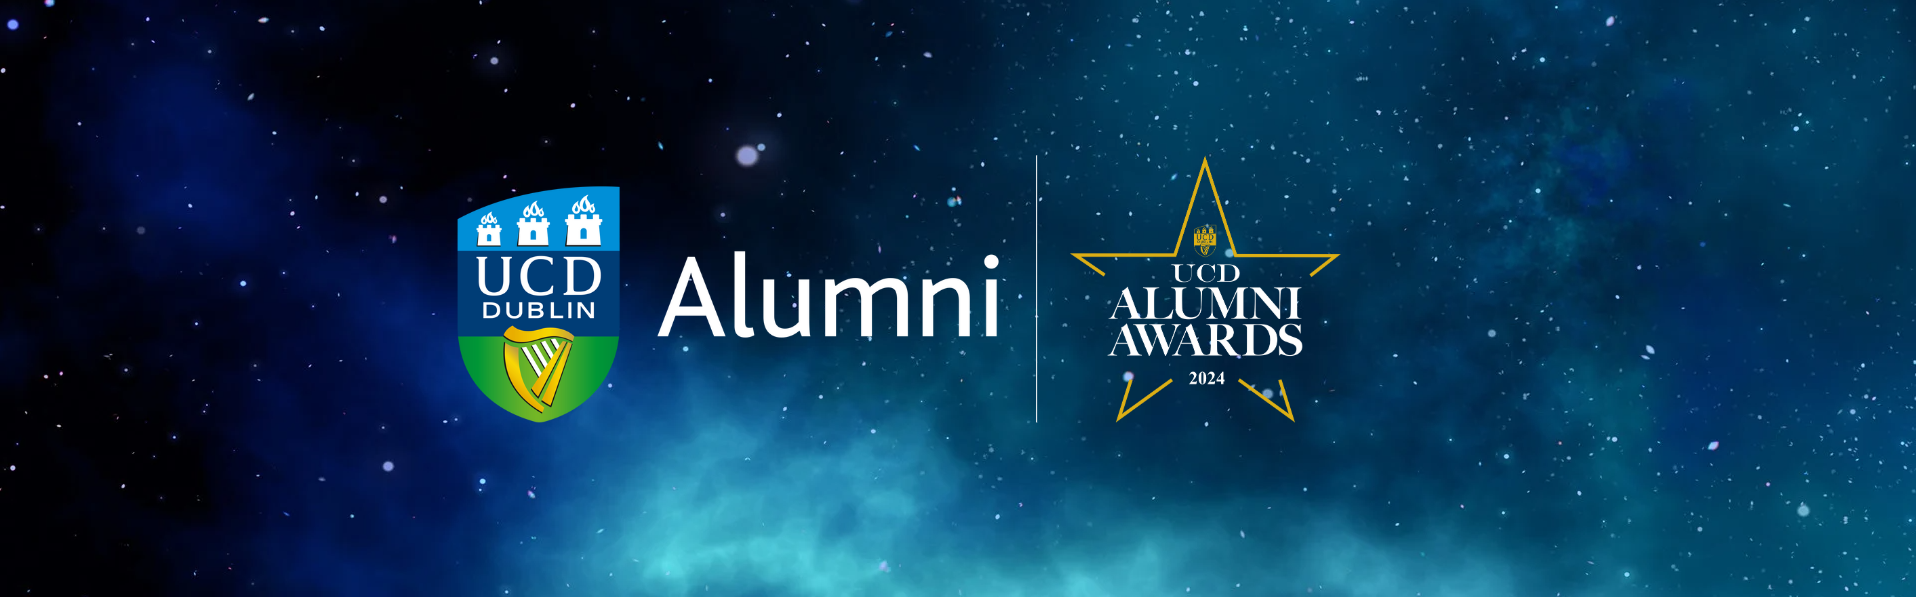 UCD Alumni Awards - Nomination s are Open